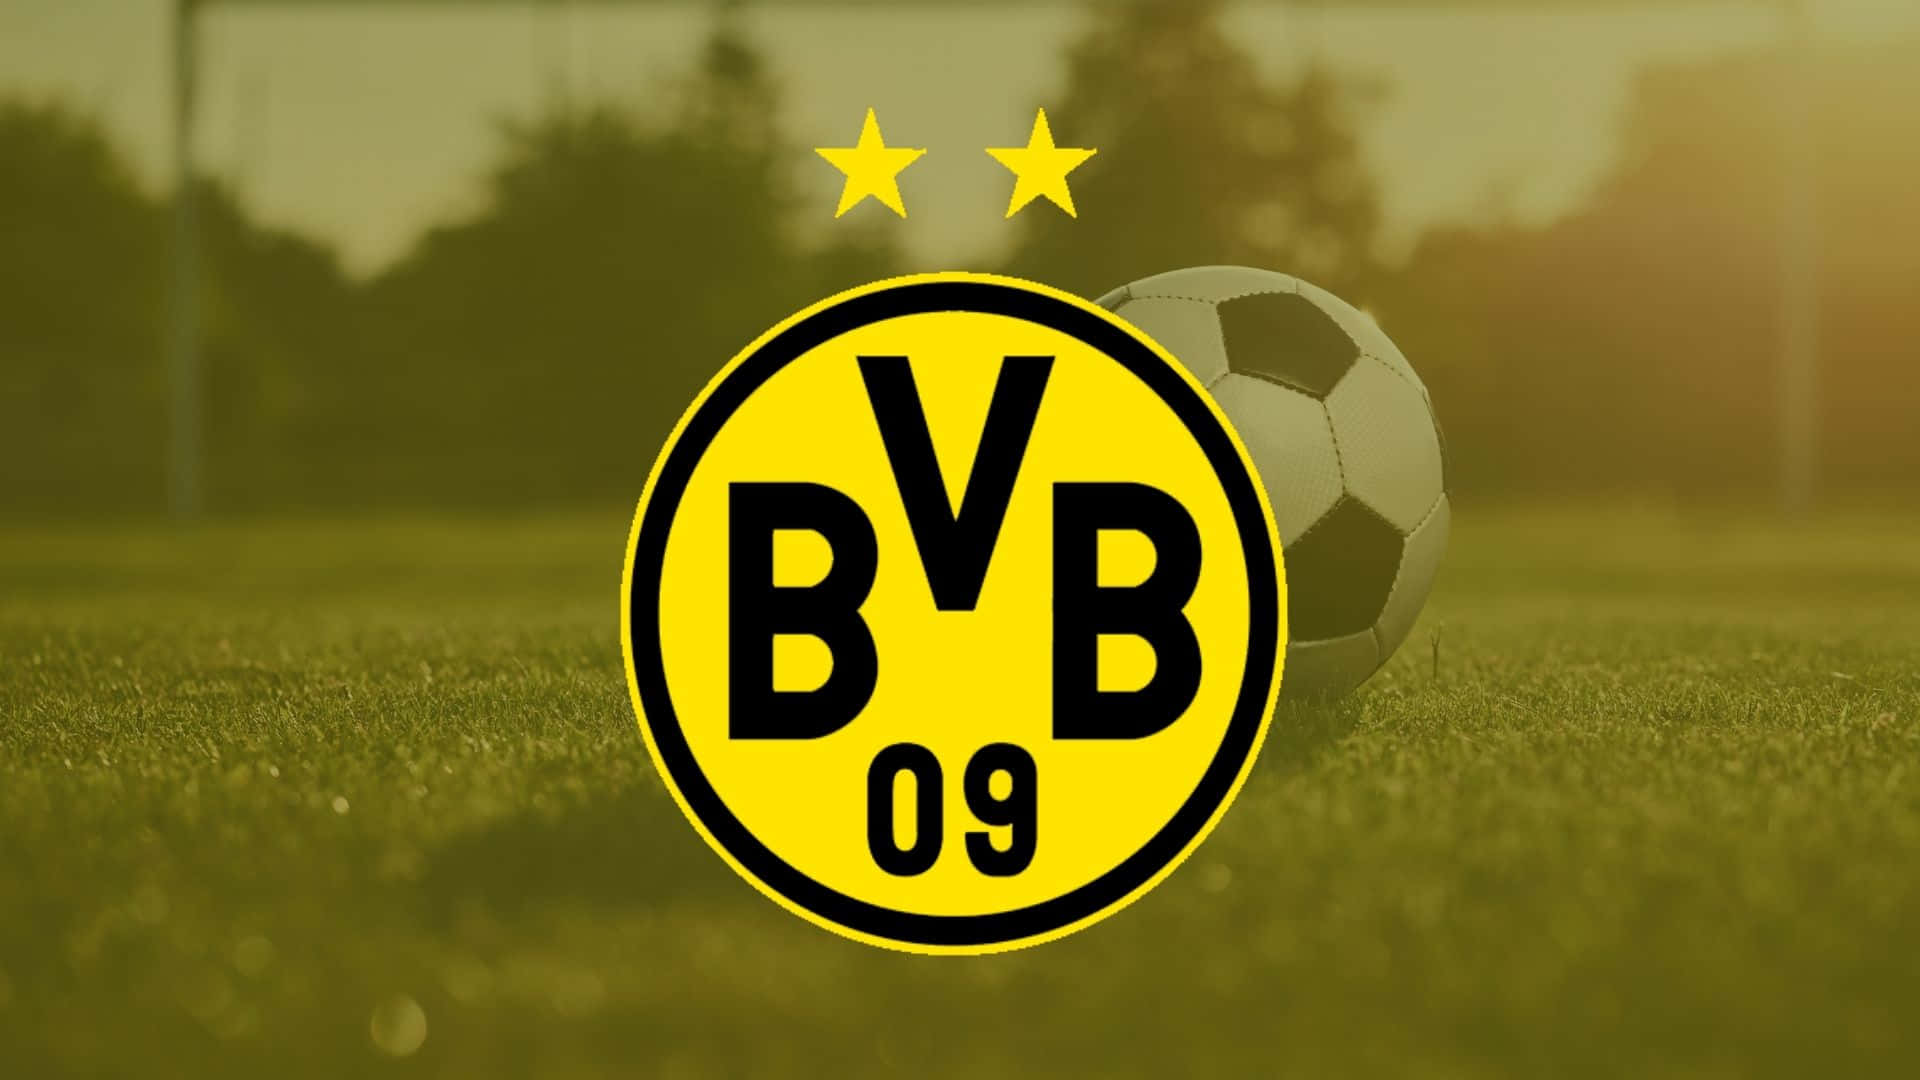 The “Signal Iduna Park”, the Home of Borussia Dortmund Wallpaper